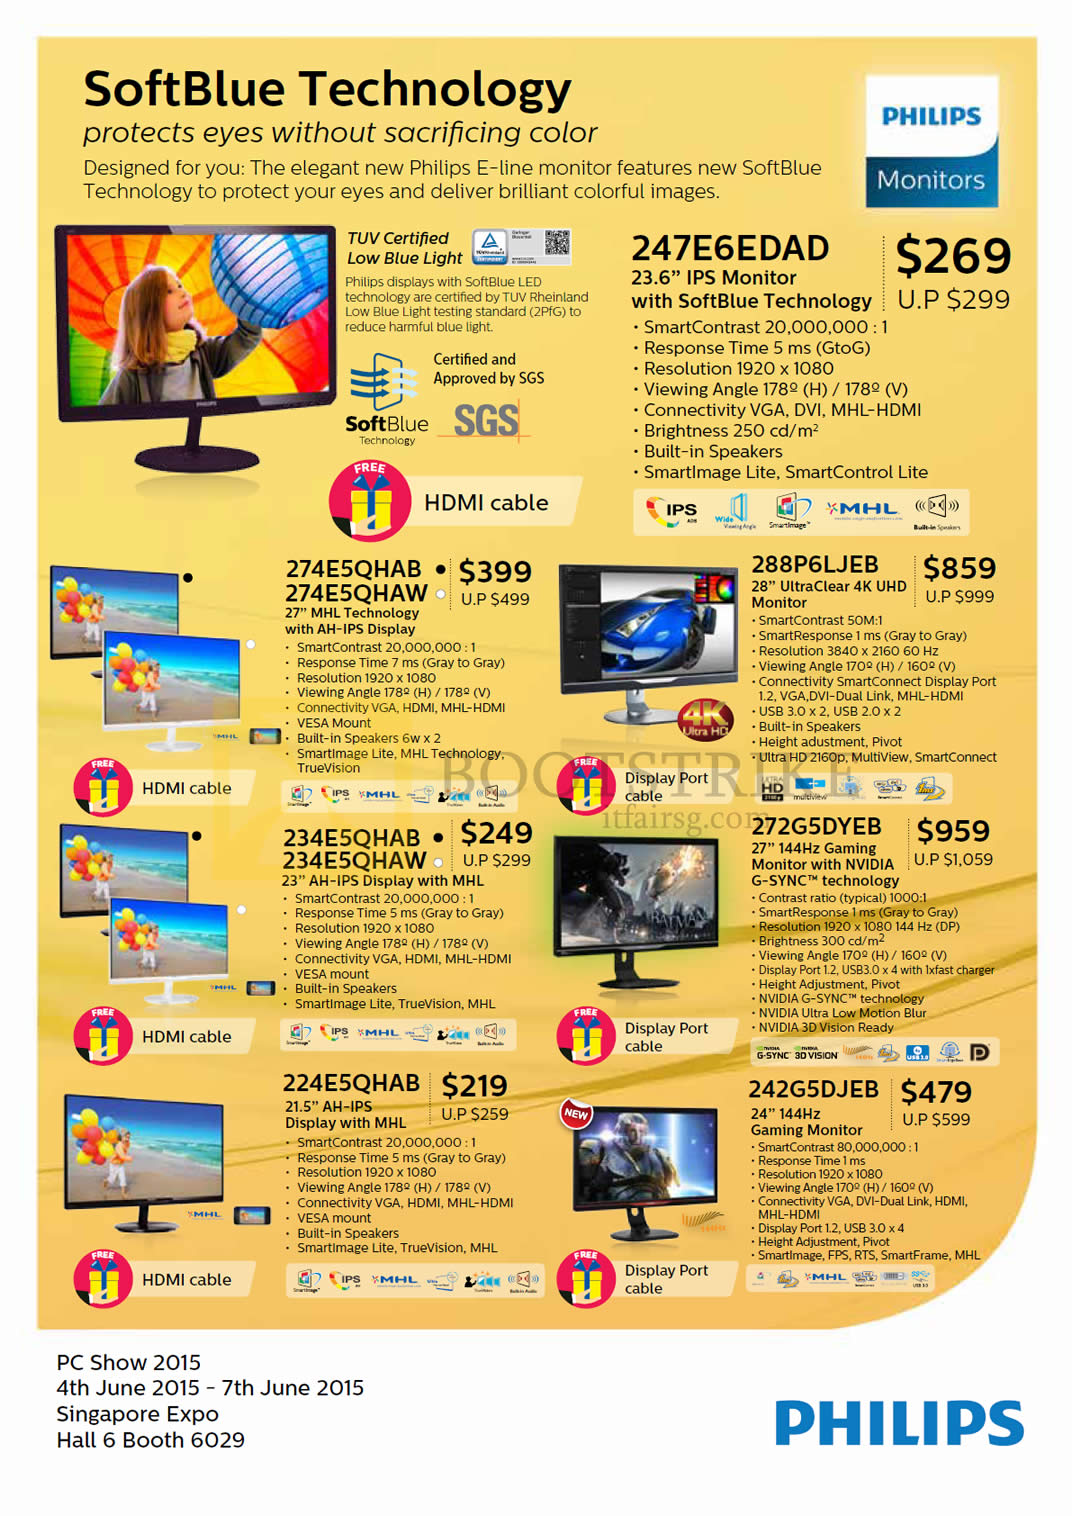 PC SHOW 2015 price list image brochure of Philips Monitors LED IPS 4K UHD, 247E6EDAD, 274E5QHAB, 274E5QHAW, 288P6LJEB, 234E5QHAB, 234E5QHAW, 272G5DYEB, 224E5QHAB, 242G5DJEB